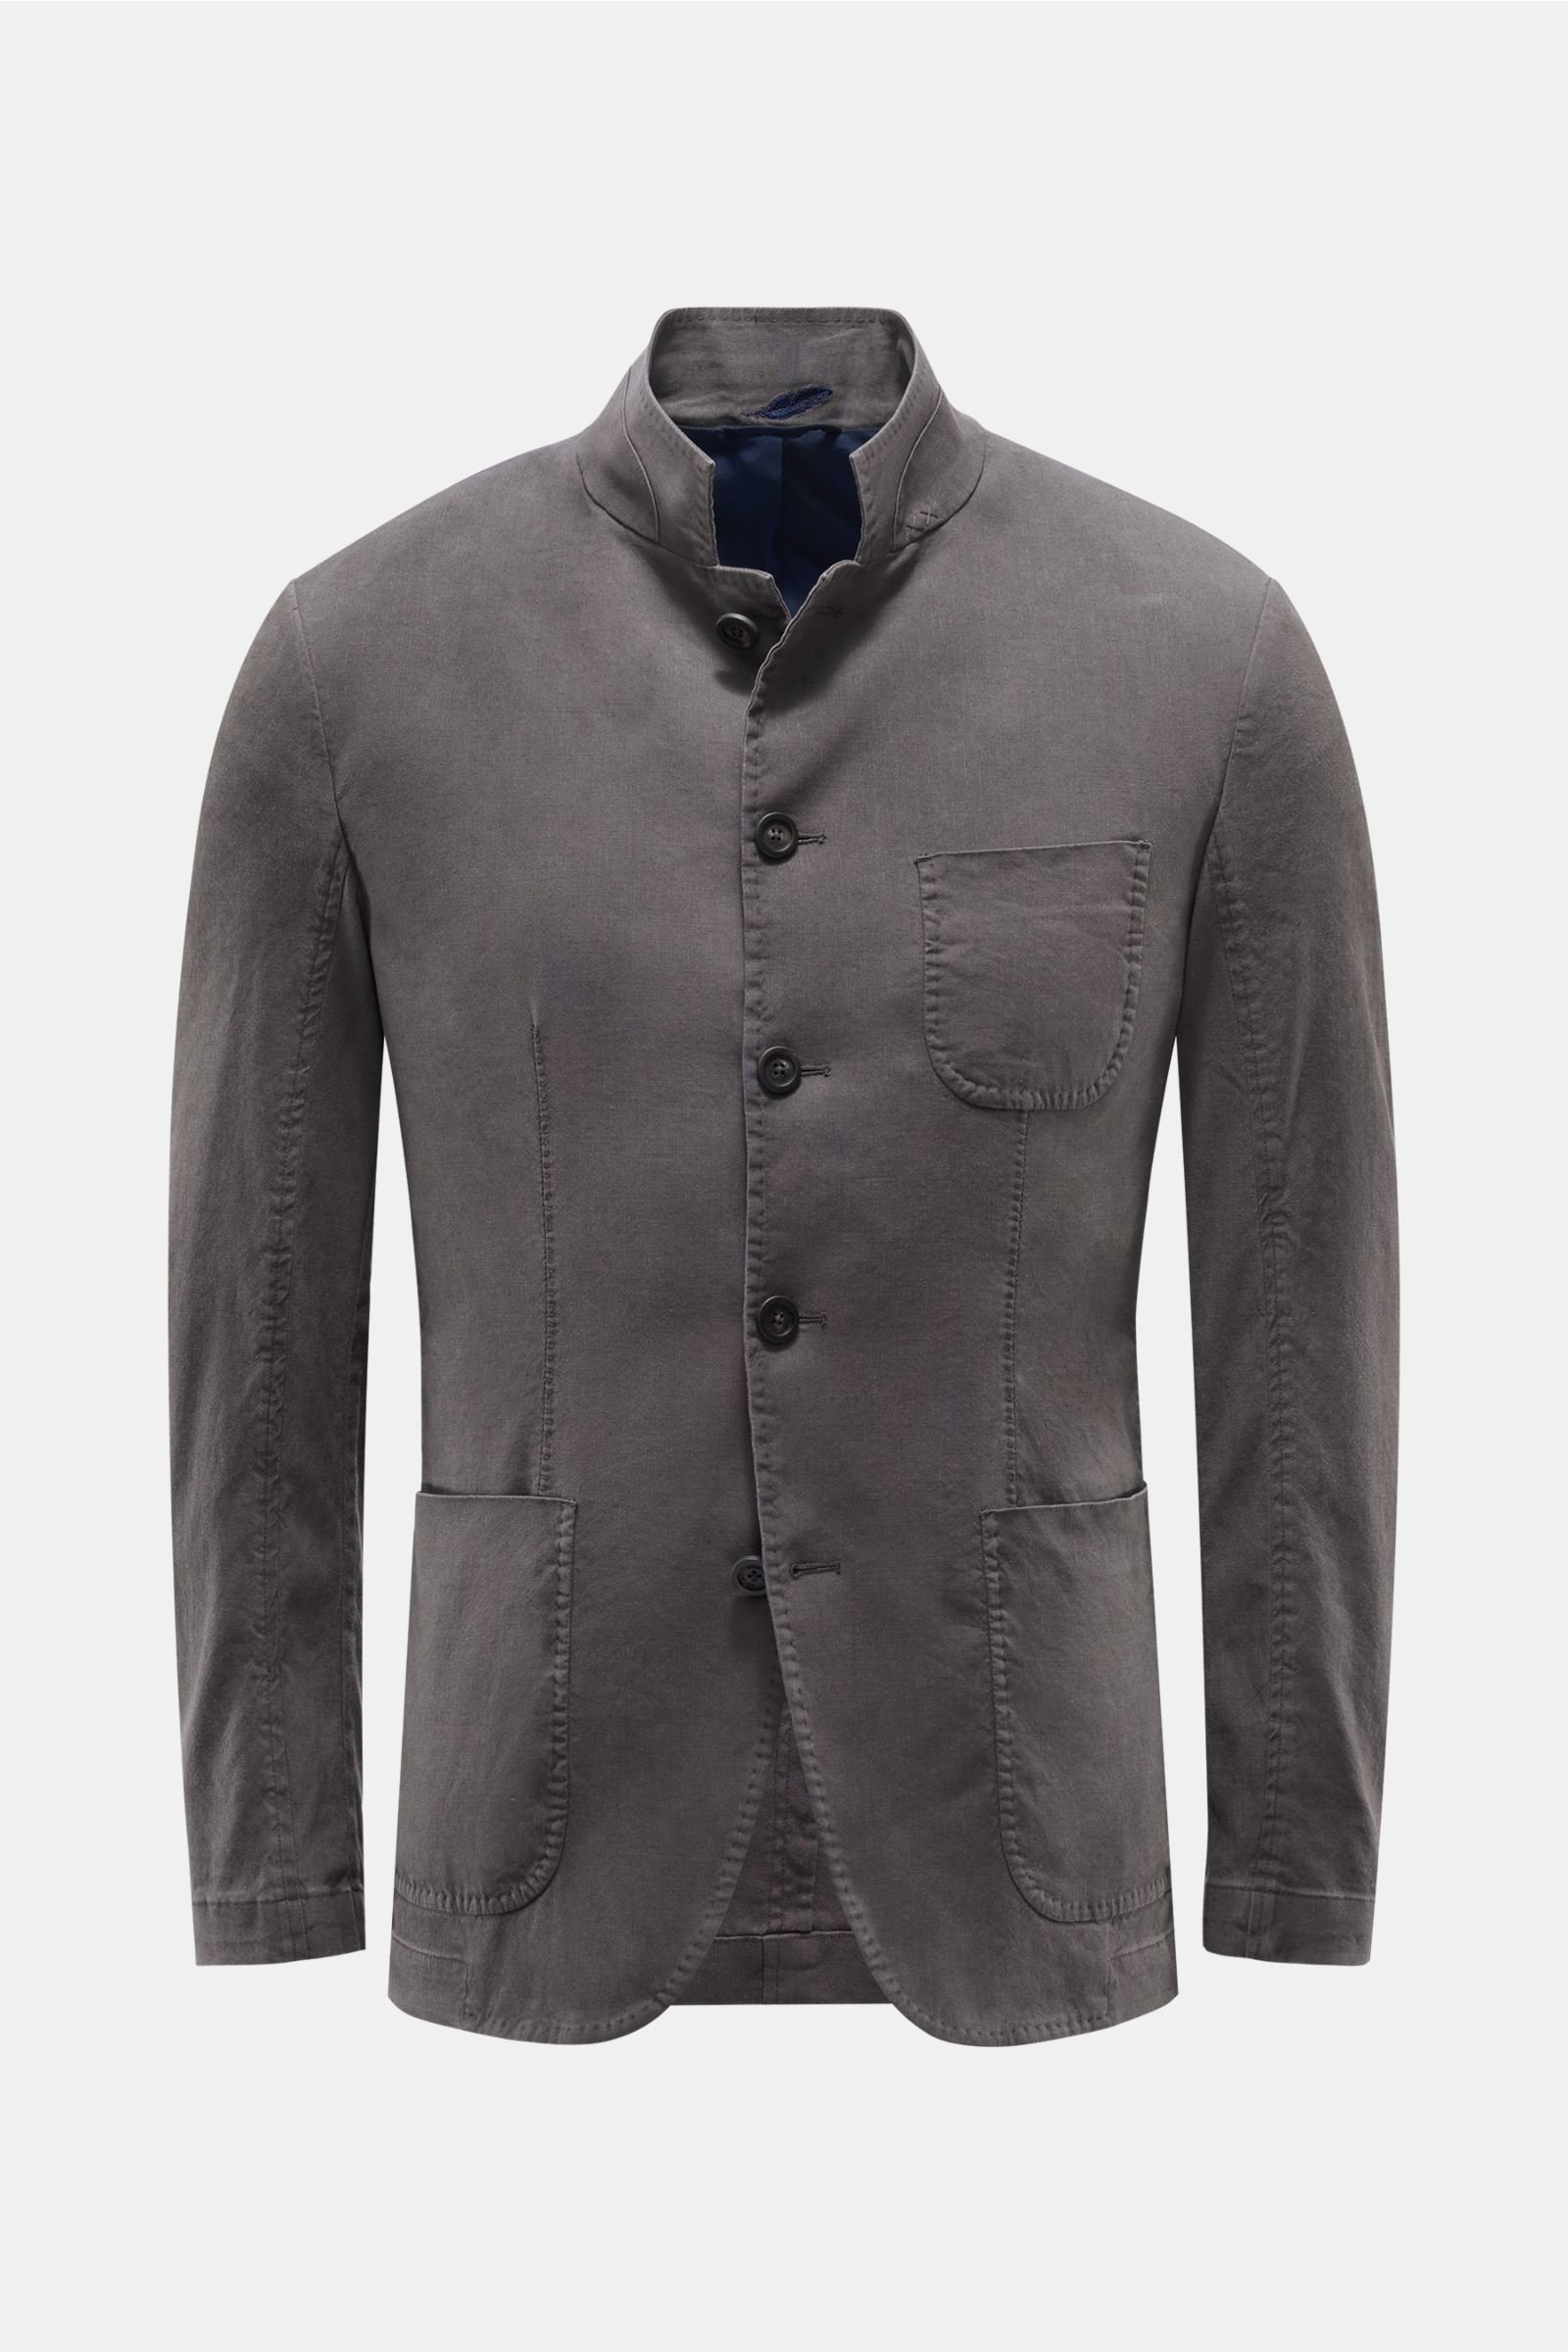 Smart-casual jacket grey